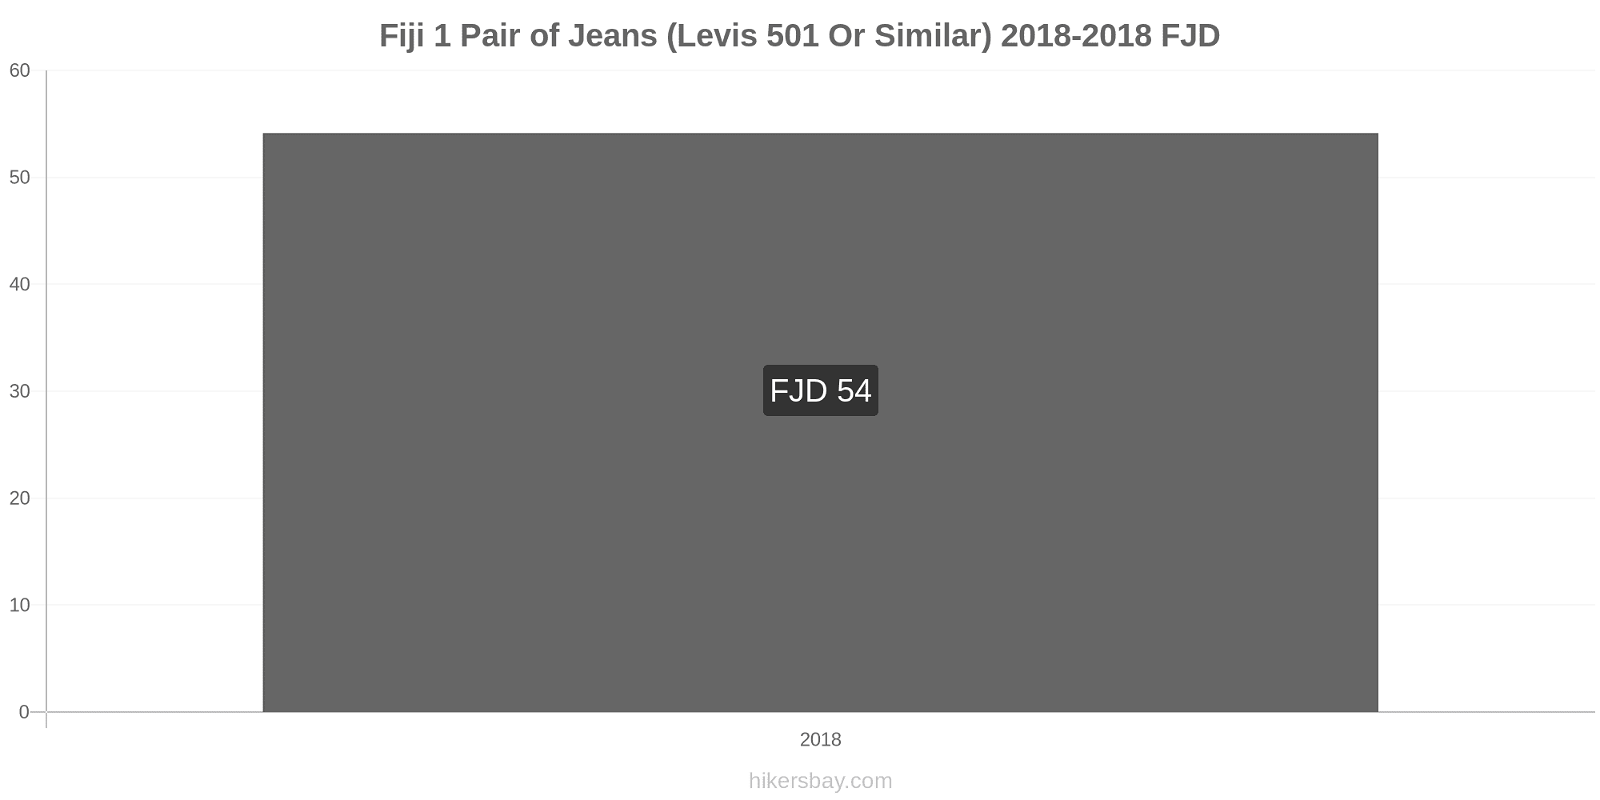 Fiji price changes 1 pair of jeans (Levis 501 or similar) hikersbay.com